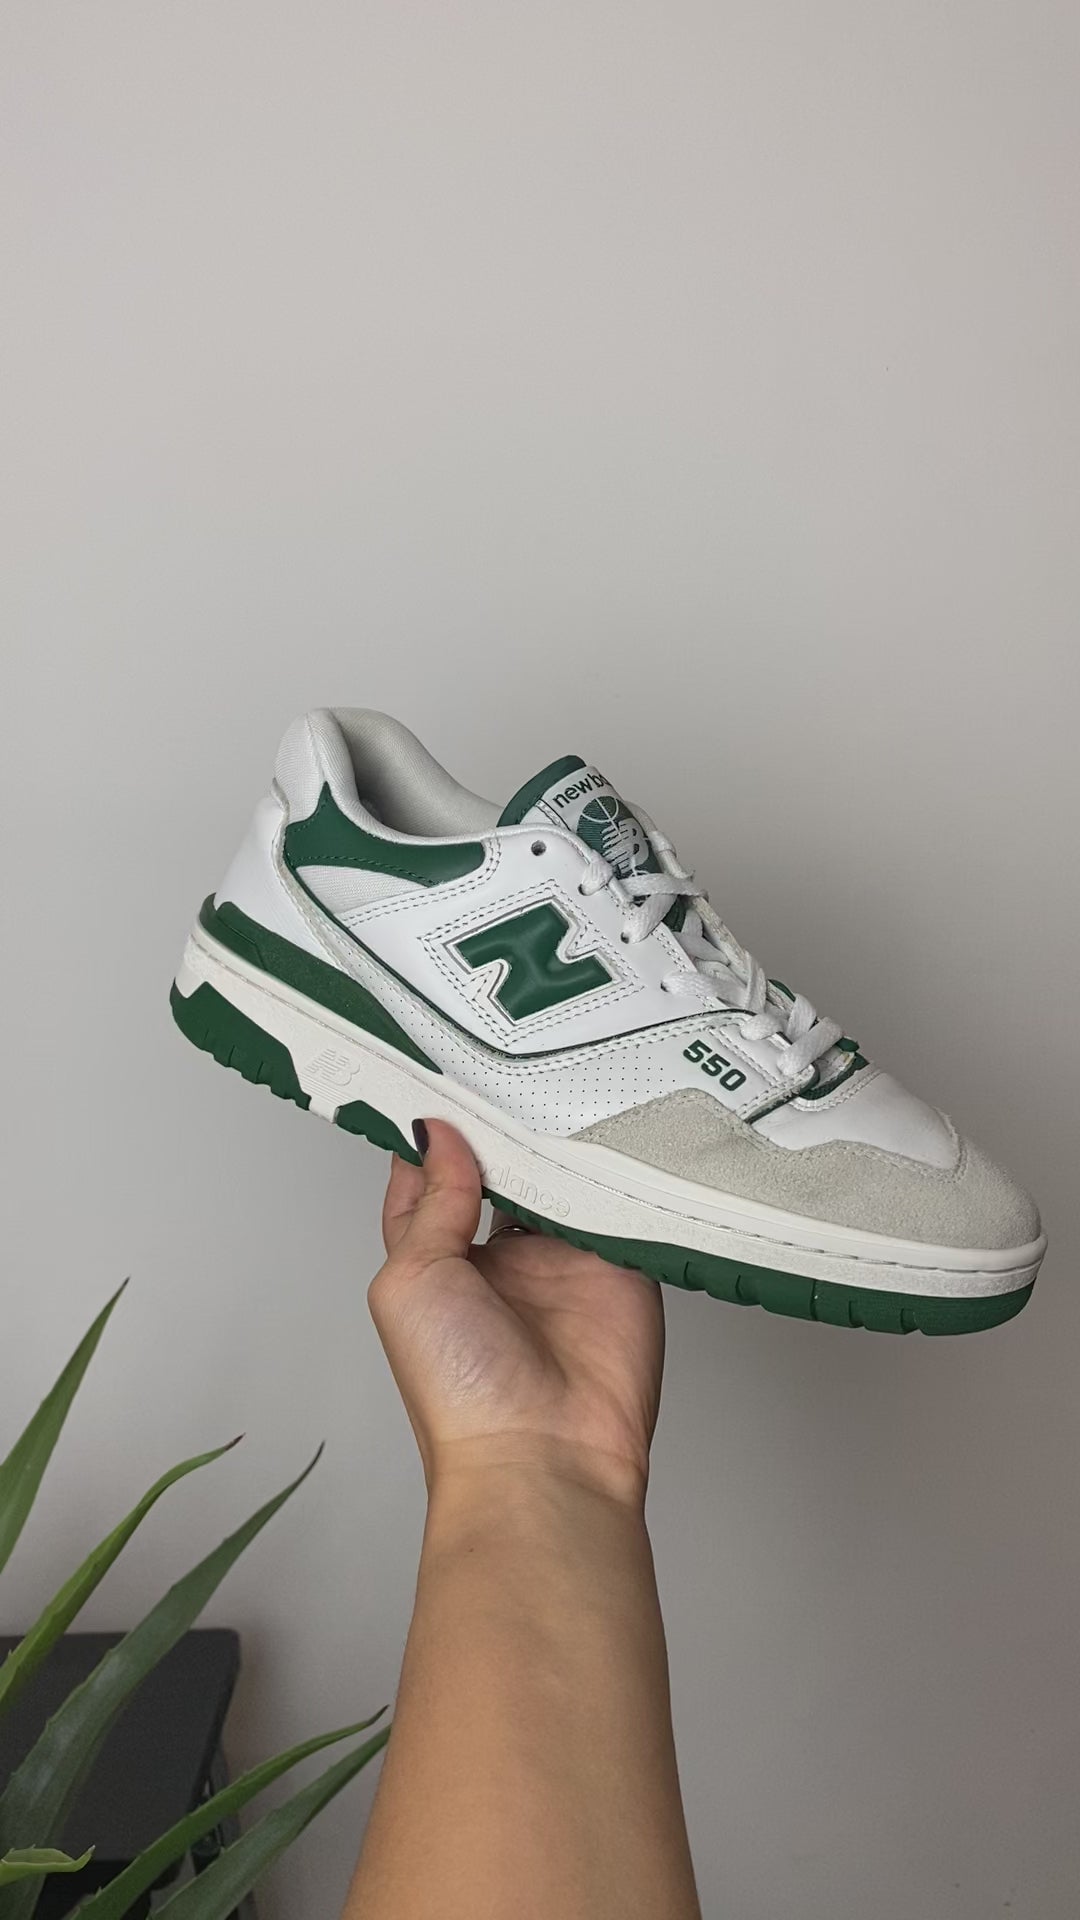 New Balance 550 'White Green